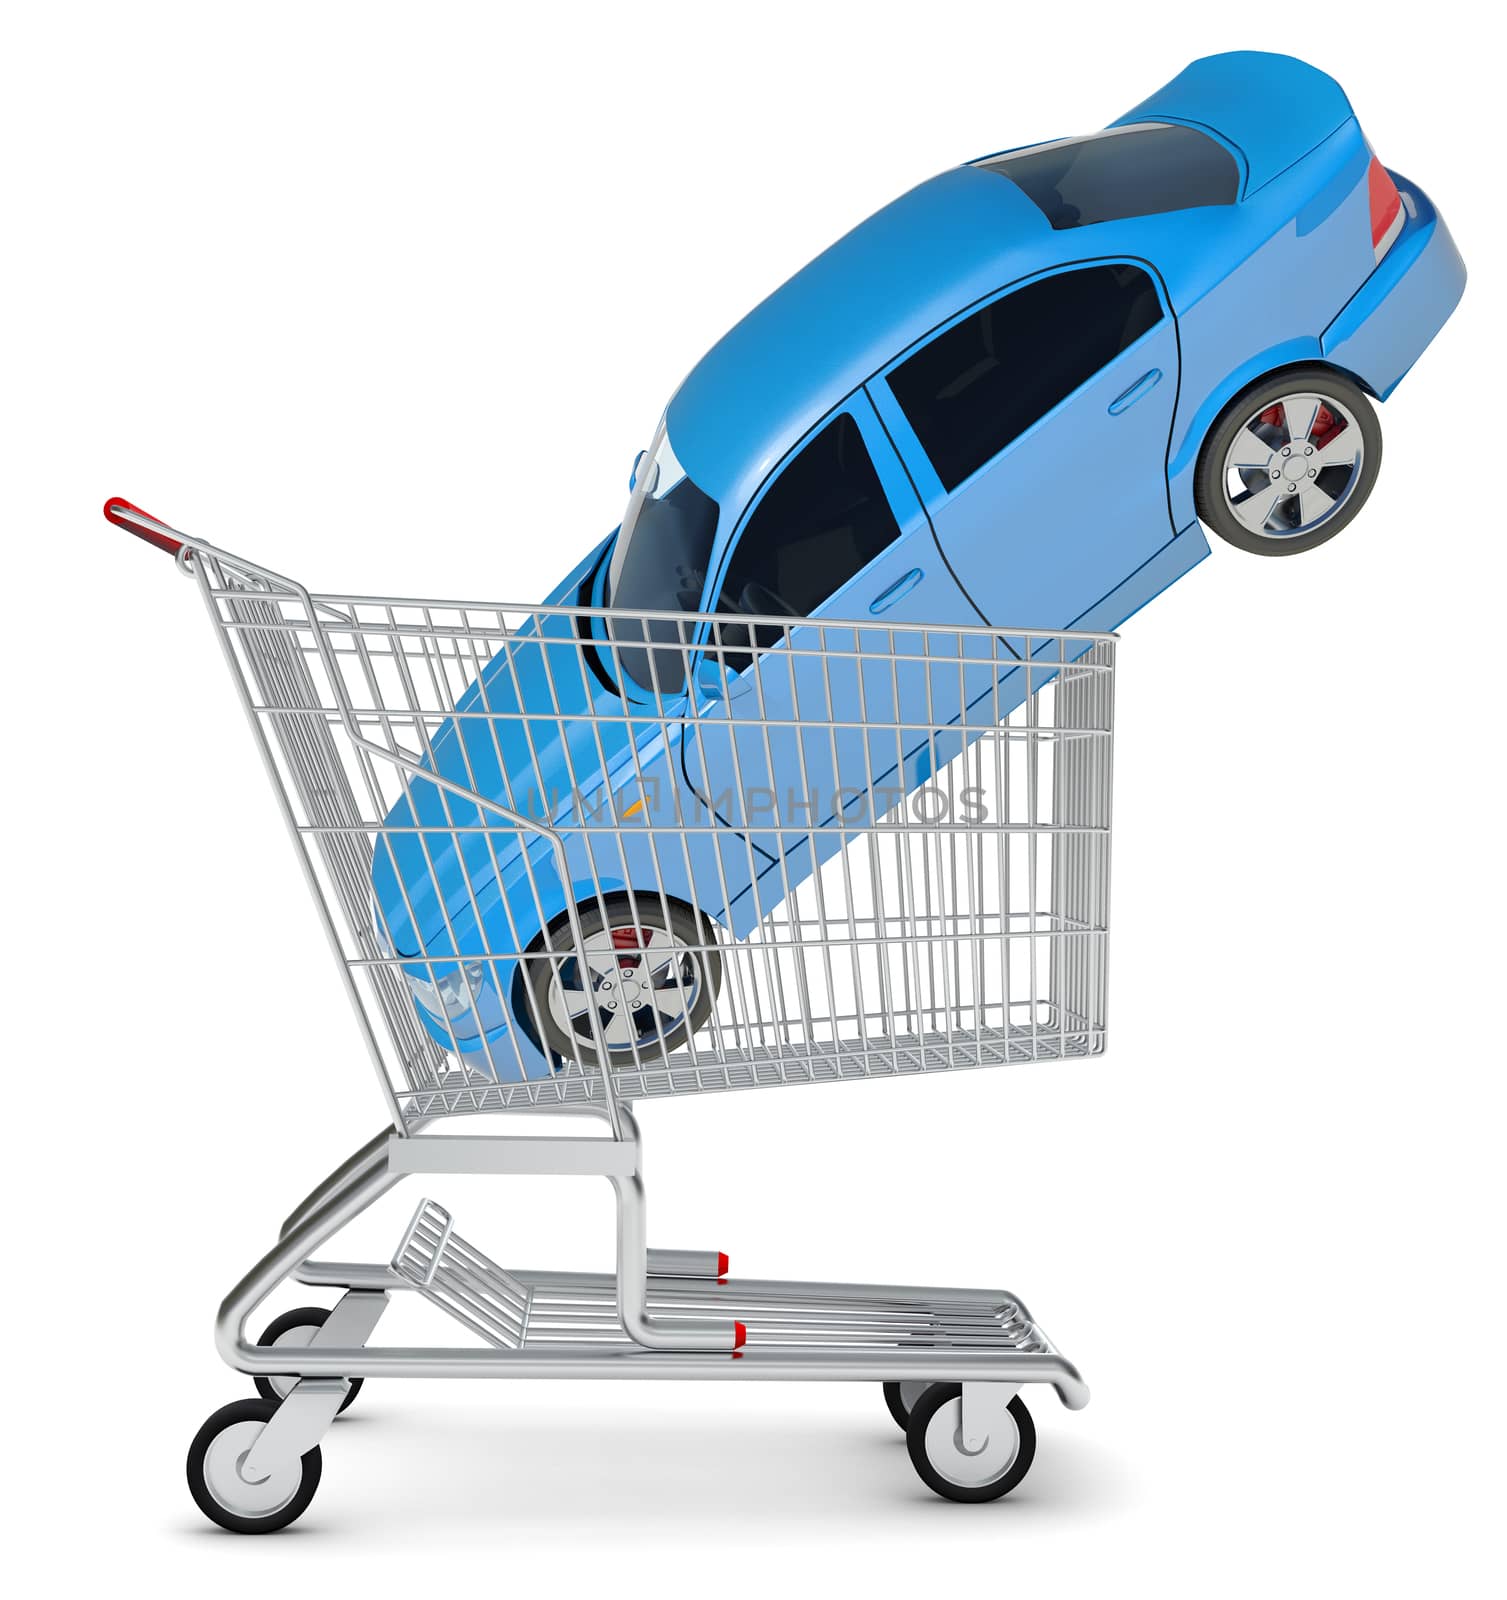 Car in shopping cart by cherezoff